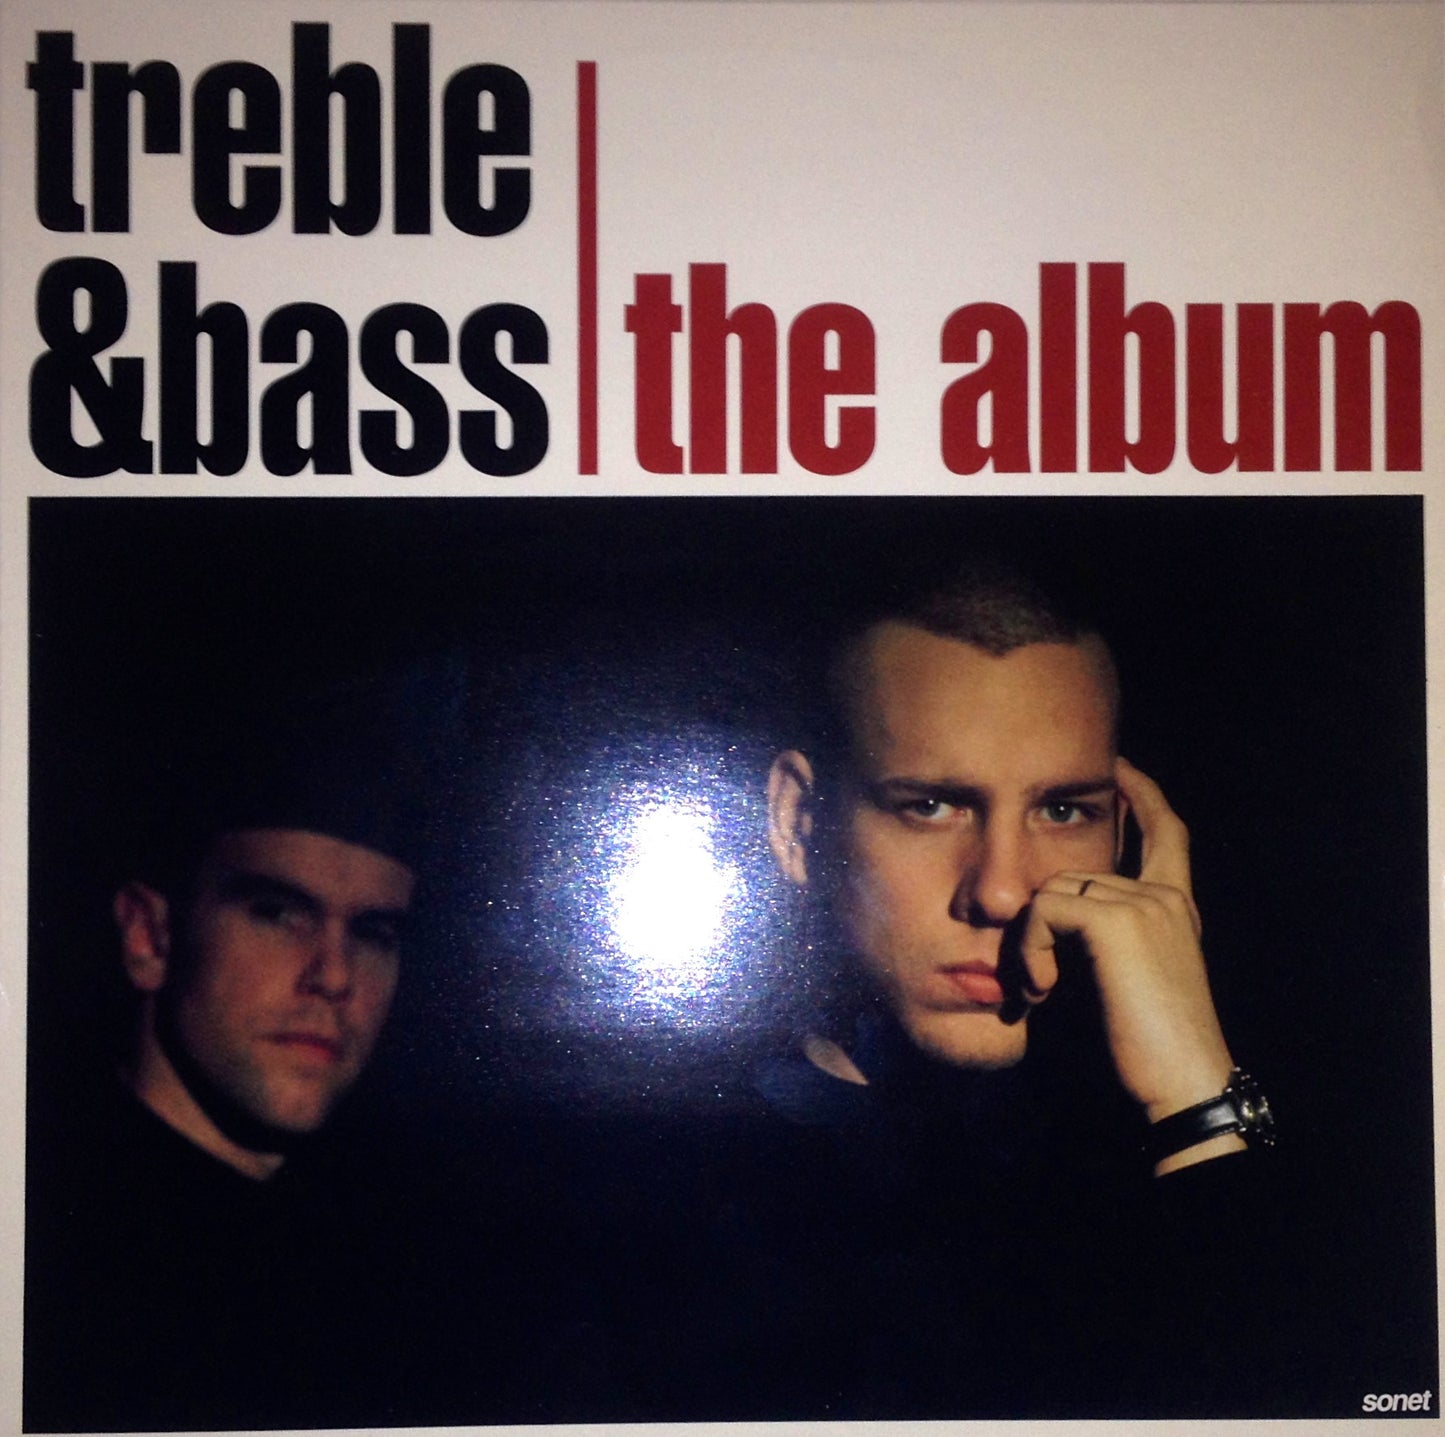 Treble & Bass - The Album